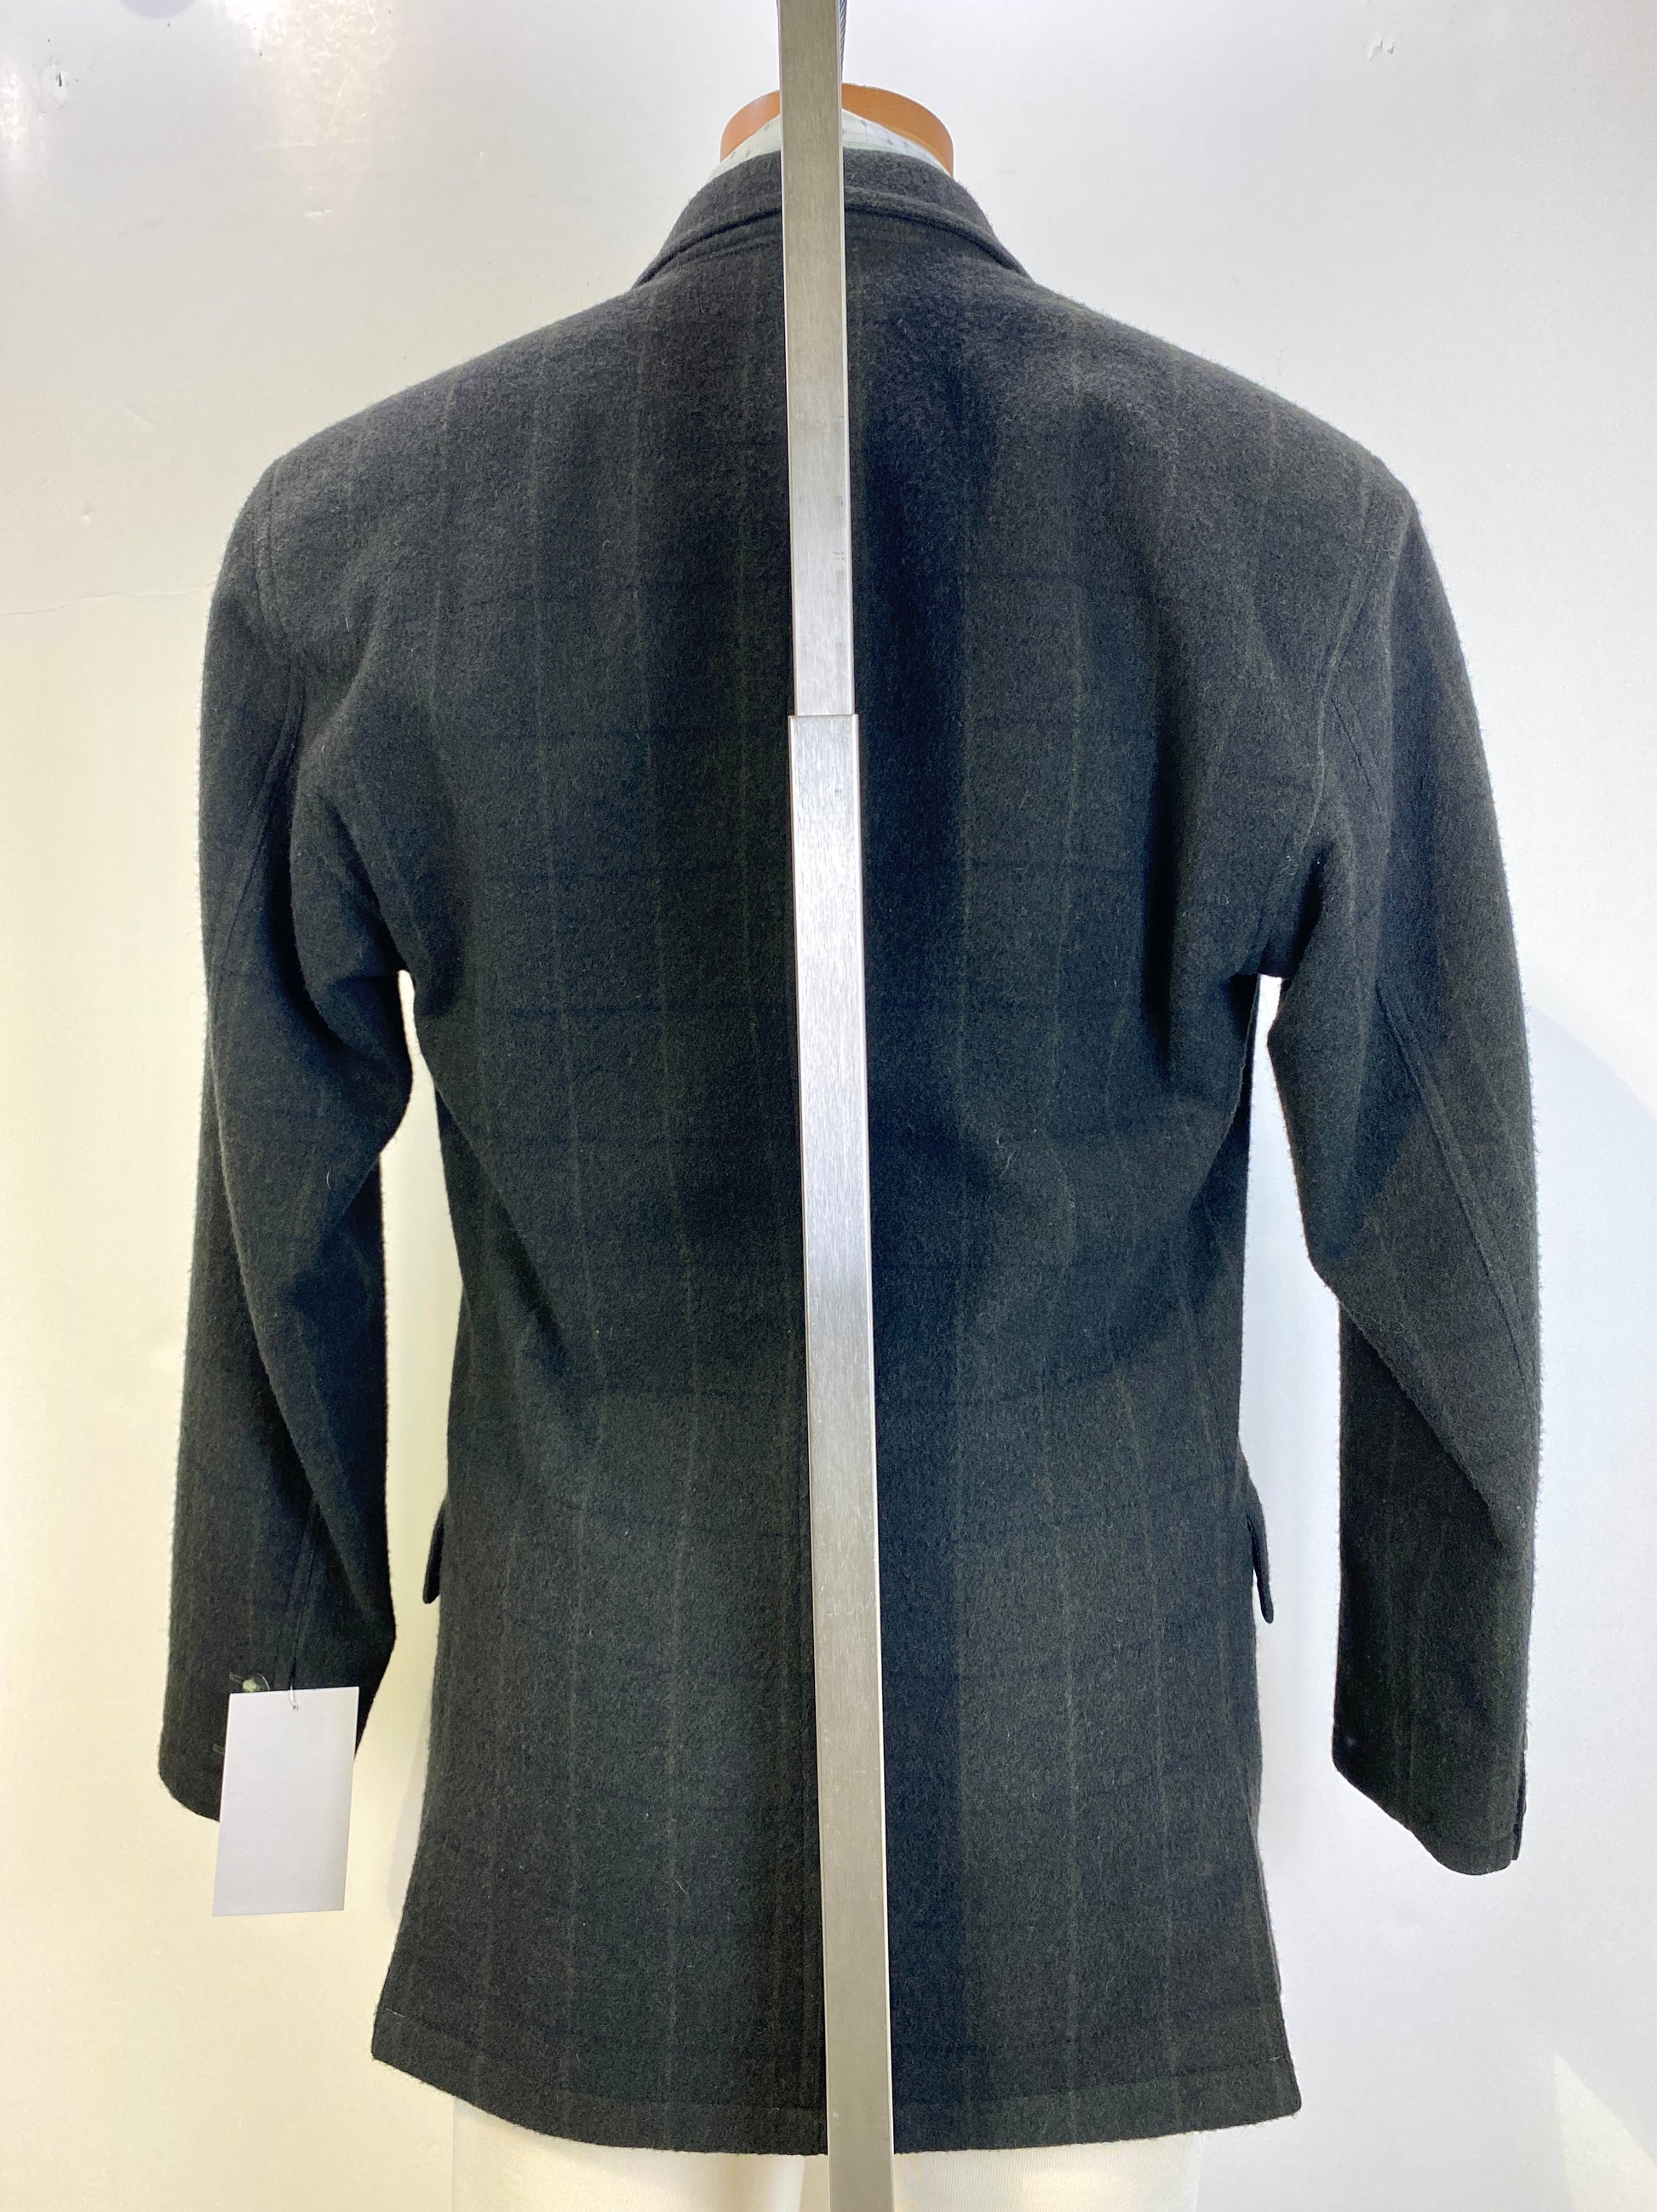 1980s Vintage Dark Green Windowpane Wool Men's Designer Blazer, Gianni Versace Italian Jacket, C40